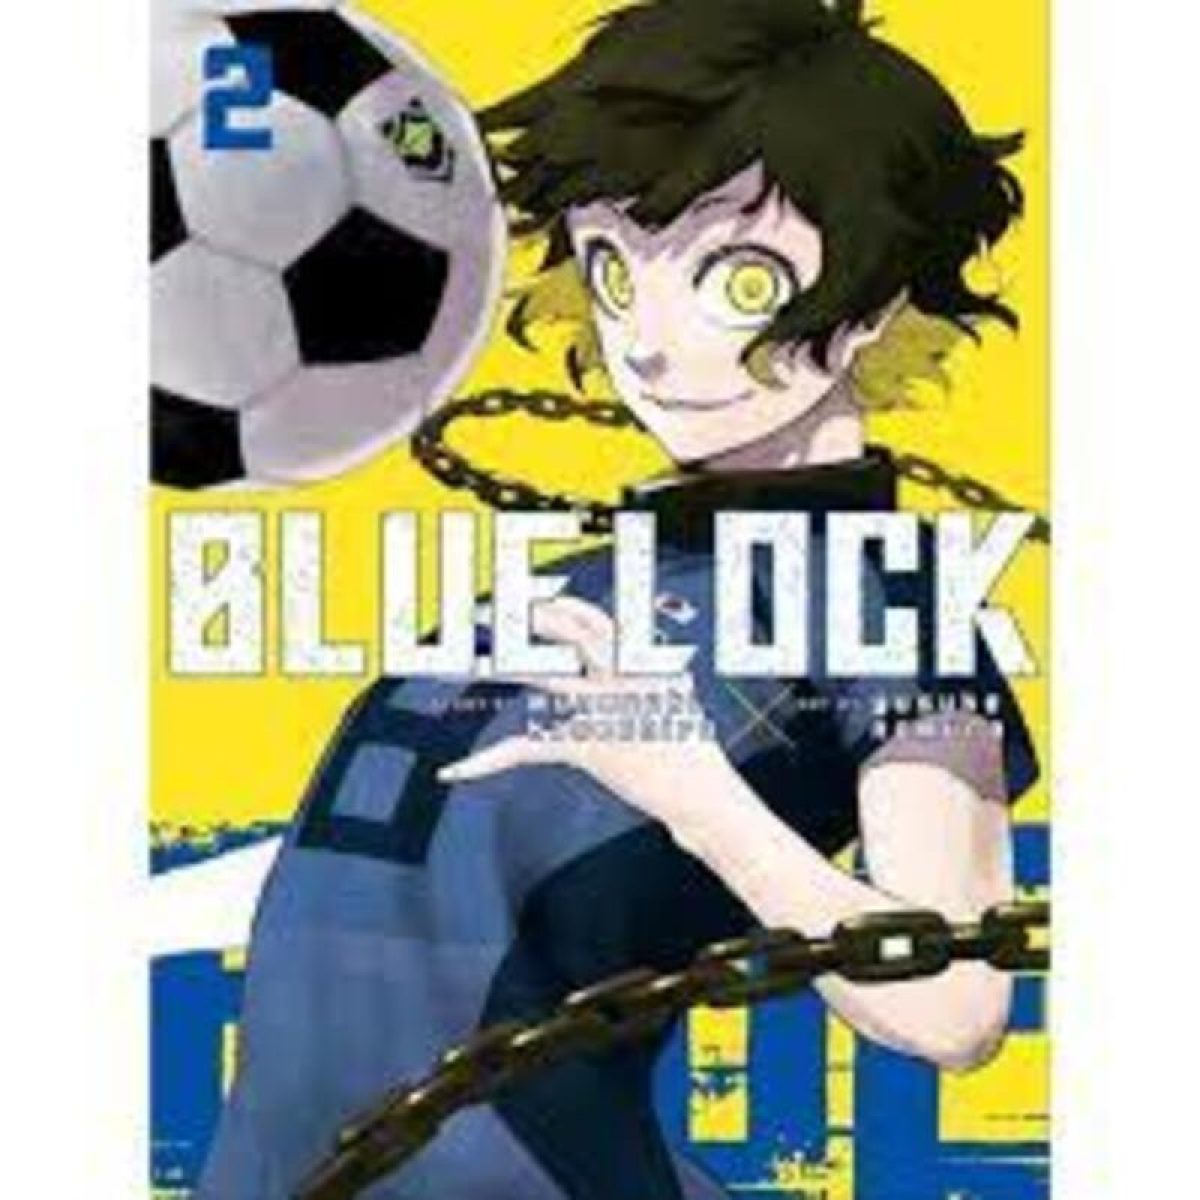 Assistir Blue Lock Episódio 17 Online - Animes BR